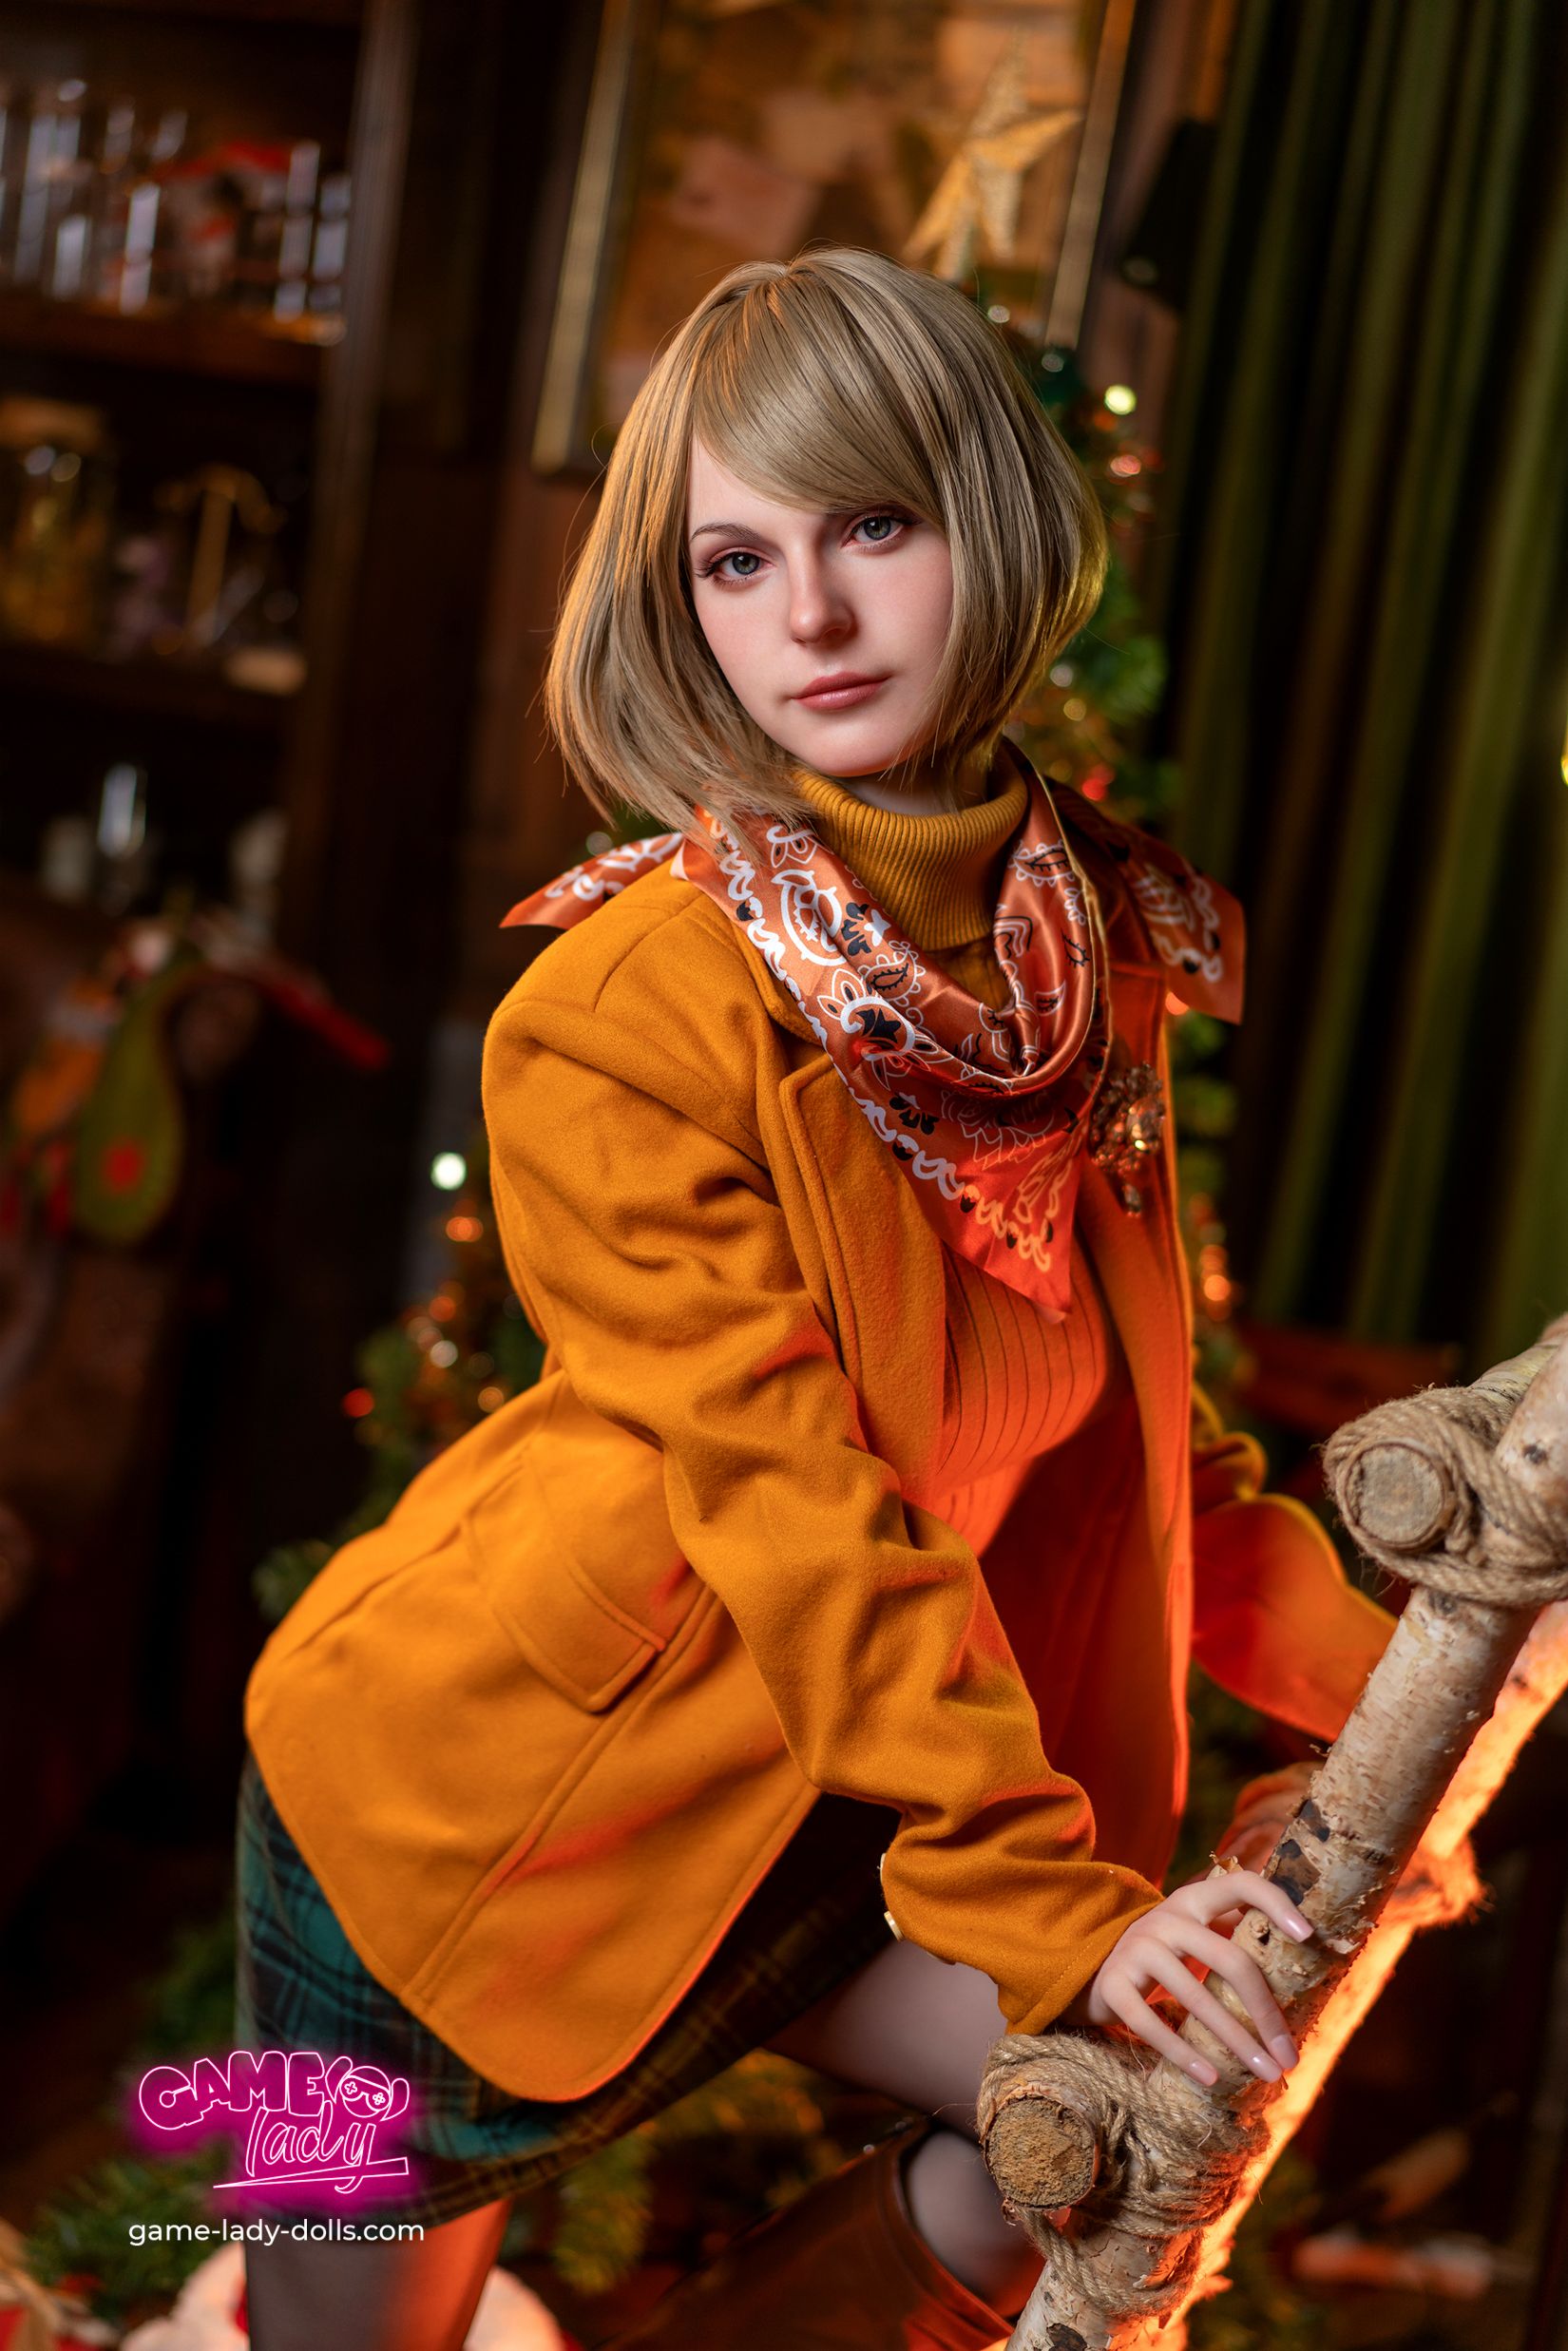 Анонсирована реалистичная секс-кукла Джилл из Resident Evil 3